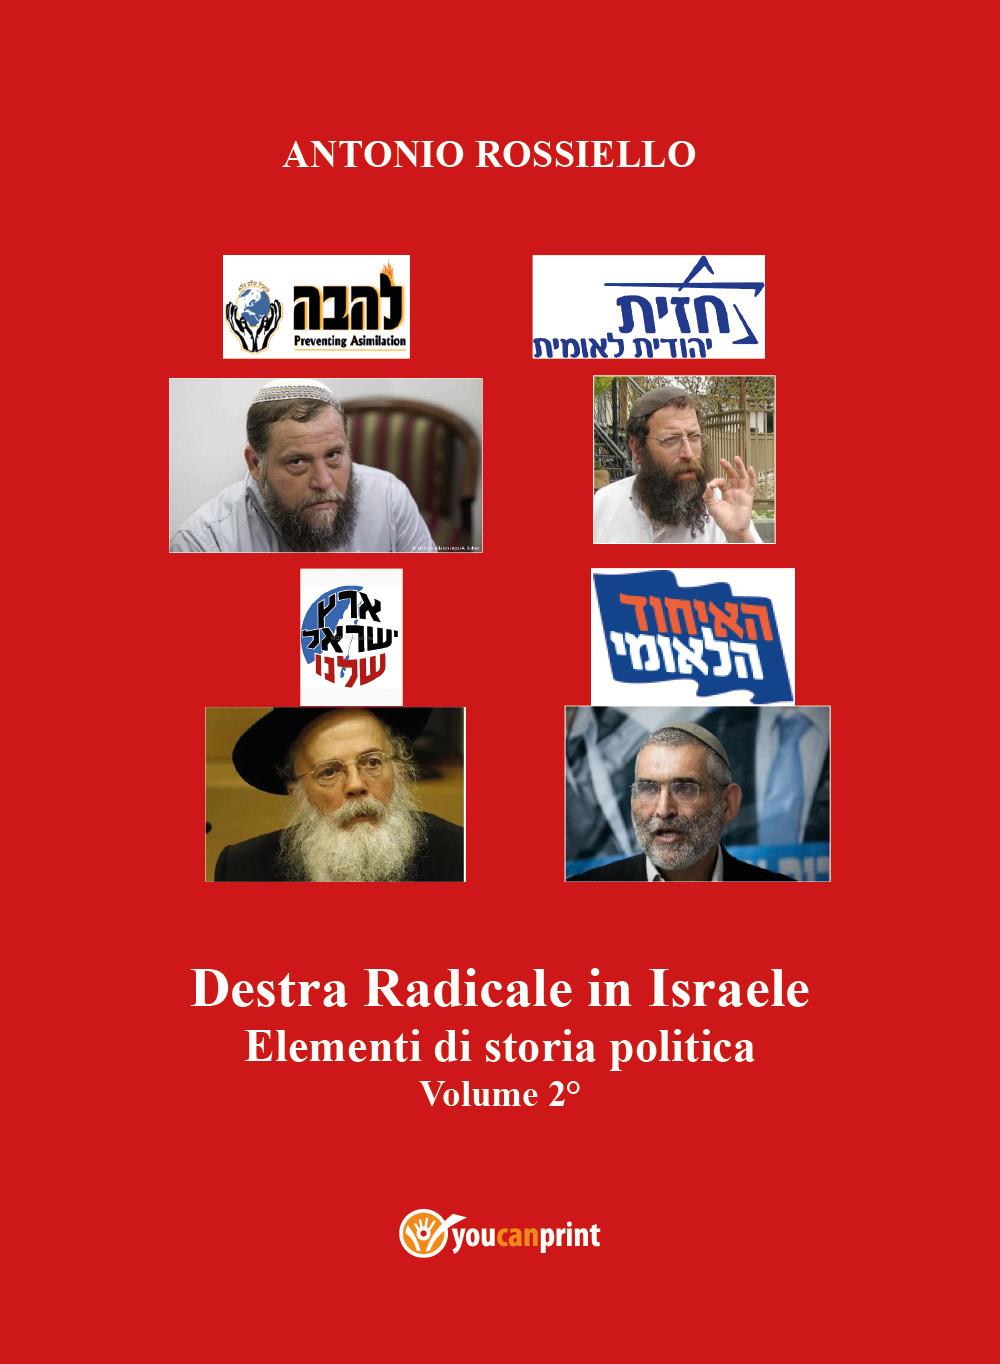 Destra radicale in Israele volume 2